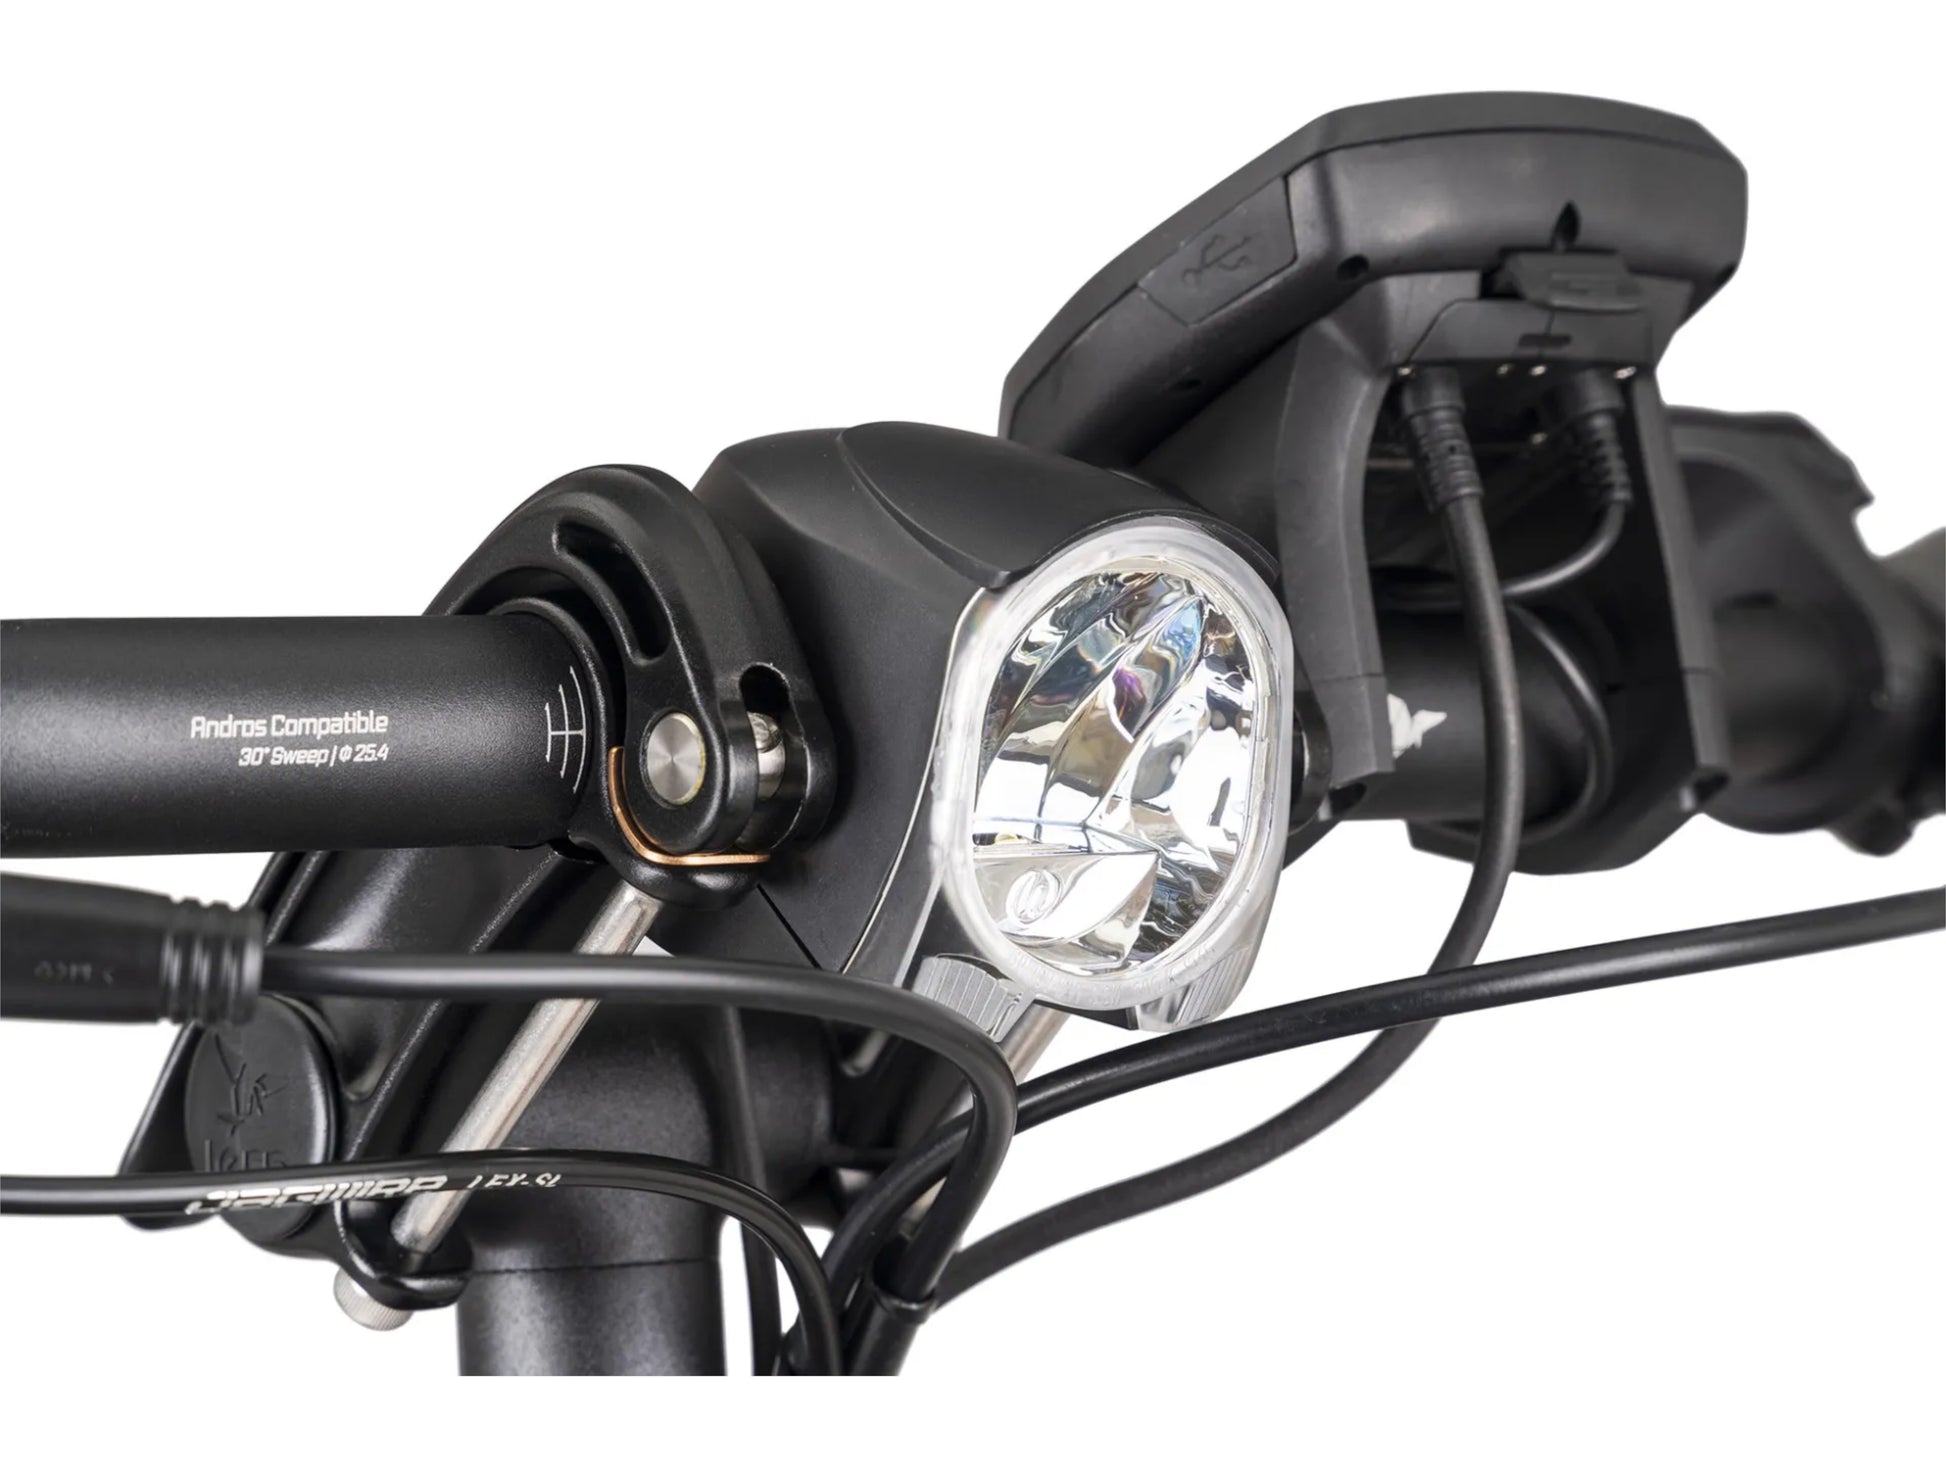 Tern NBD S5i electric cargo bike close up Valo headlight headset